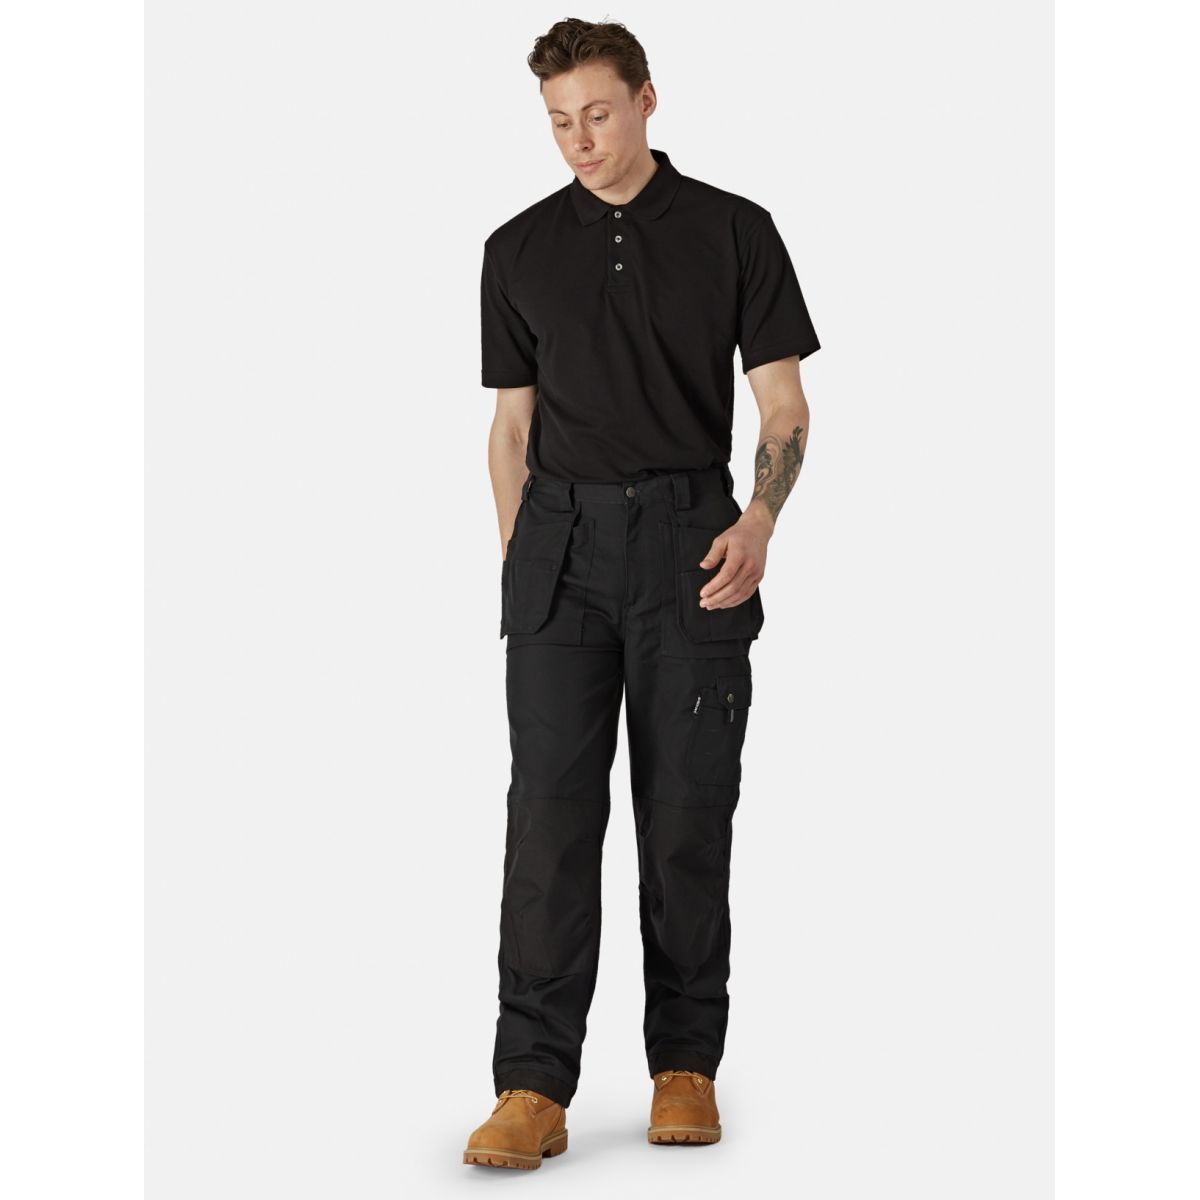 Pantalon Eisenhower multi-poches Noir - Dickies - Taille 44 2